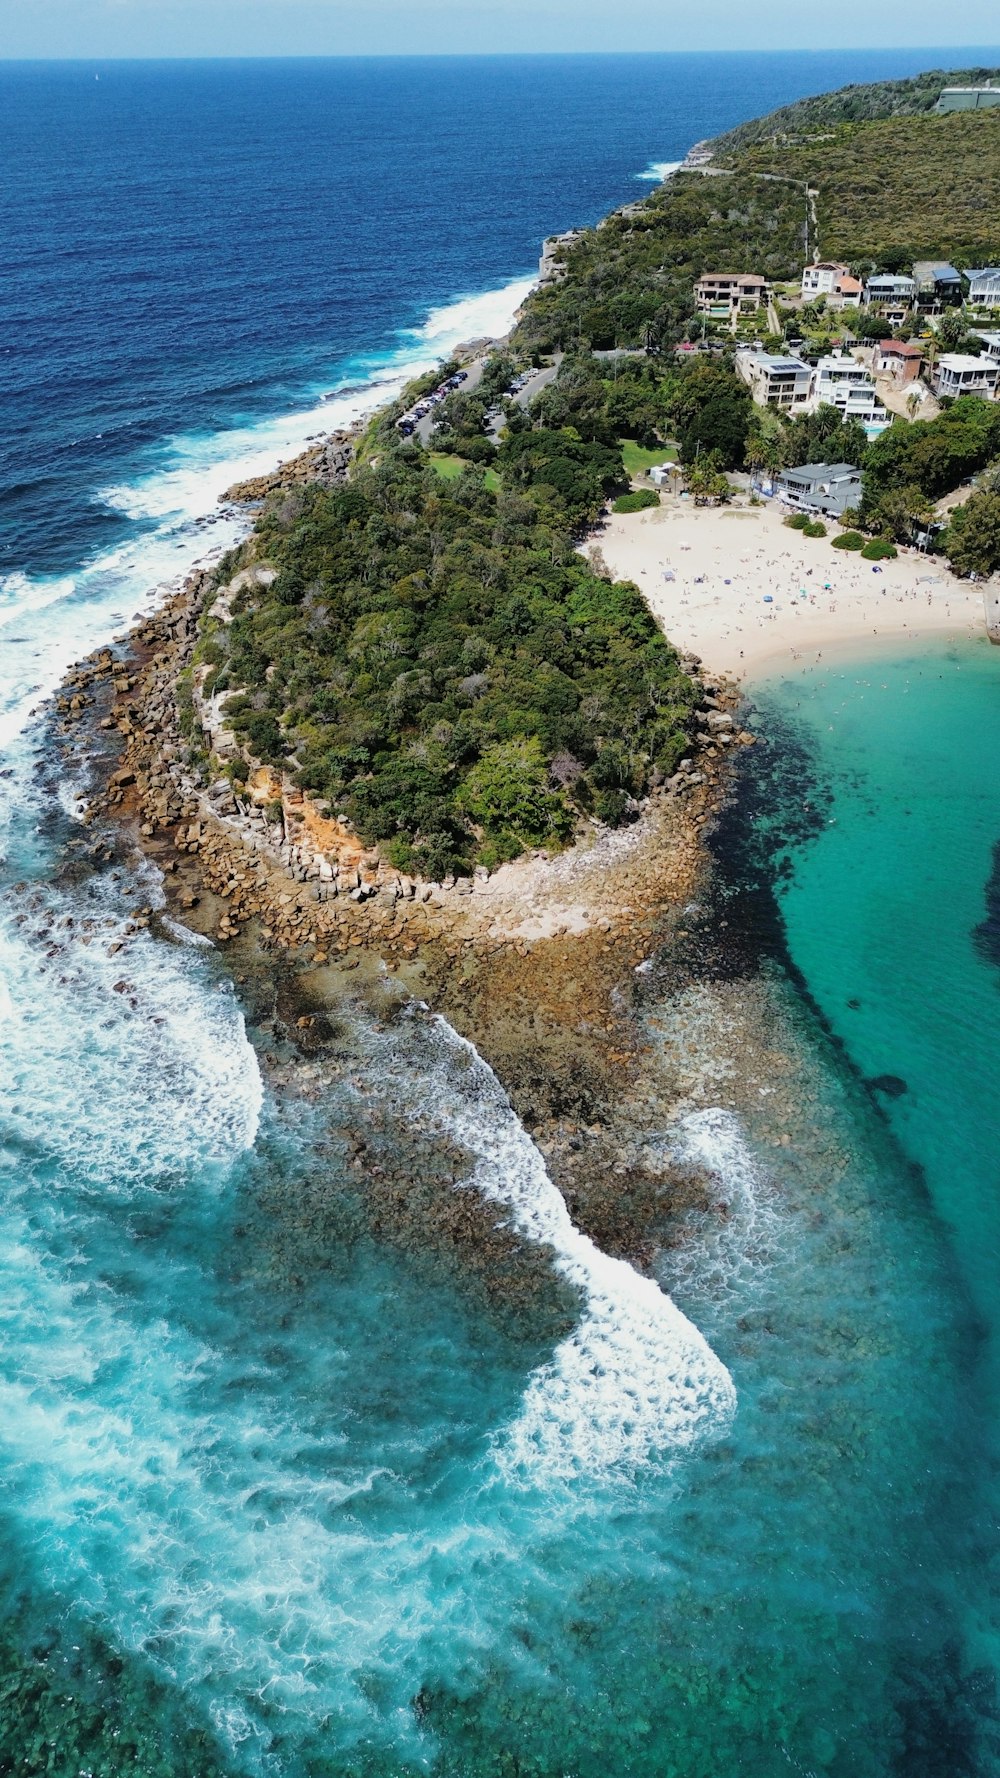 an aerial view of an island with a sandy beach